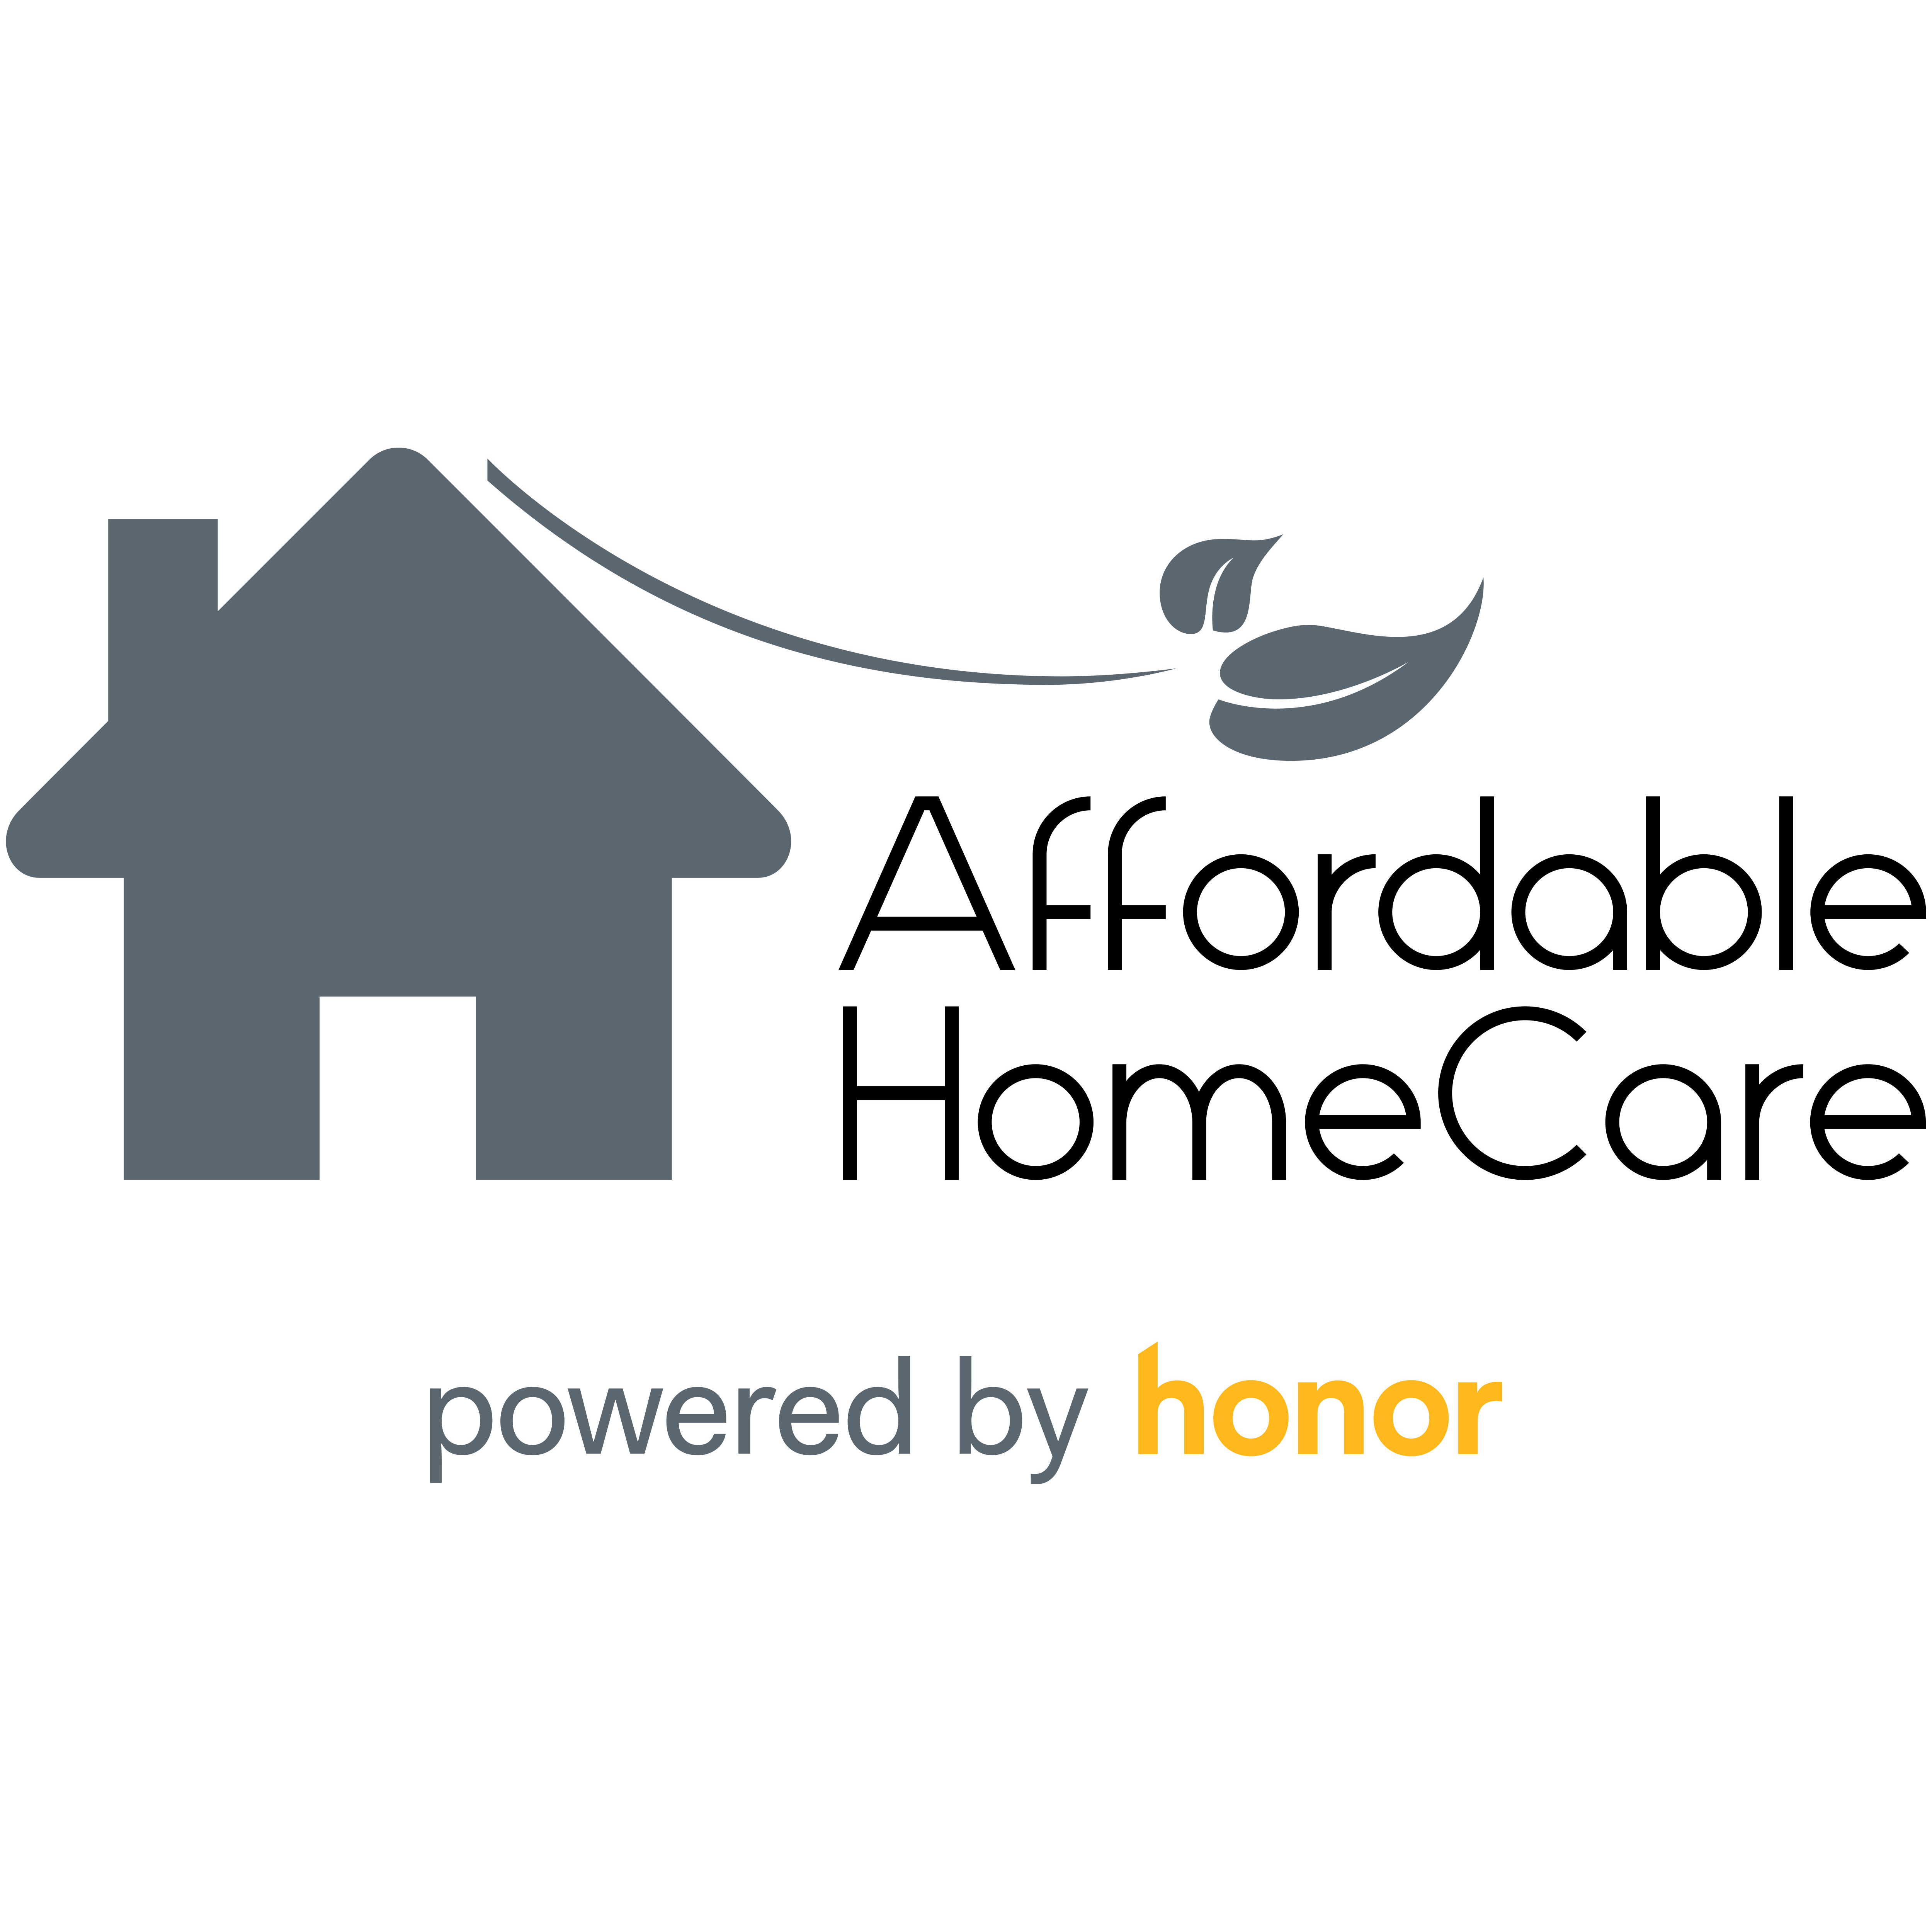 Affordable HomeCare, 30640 W 12 Mile Rd, Farmington Hills, MI ...